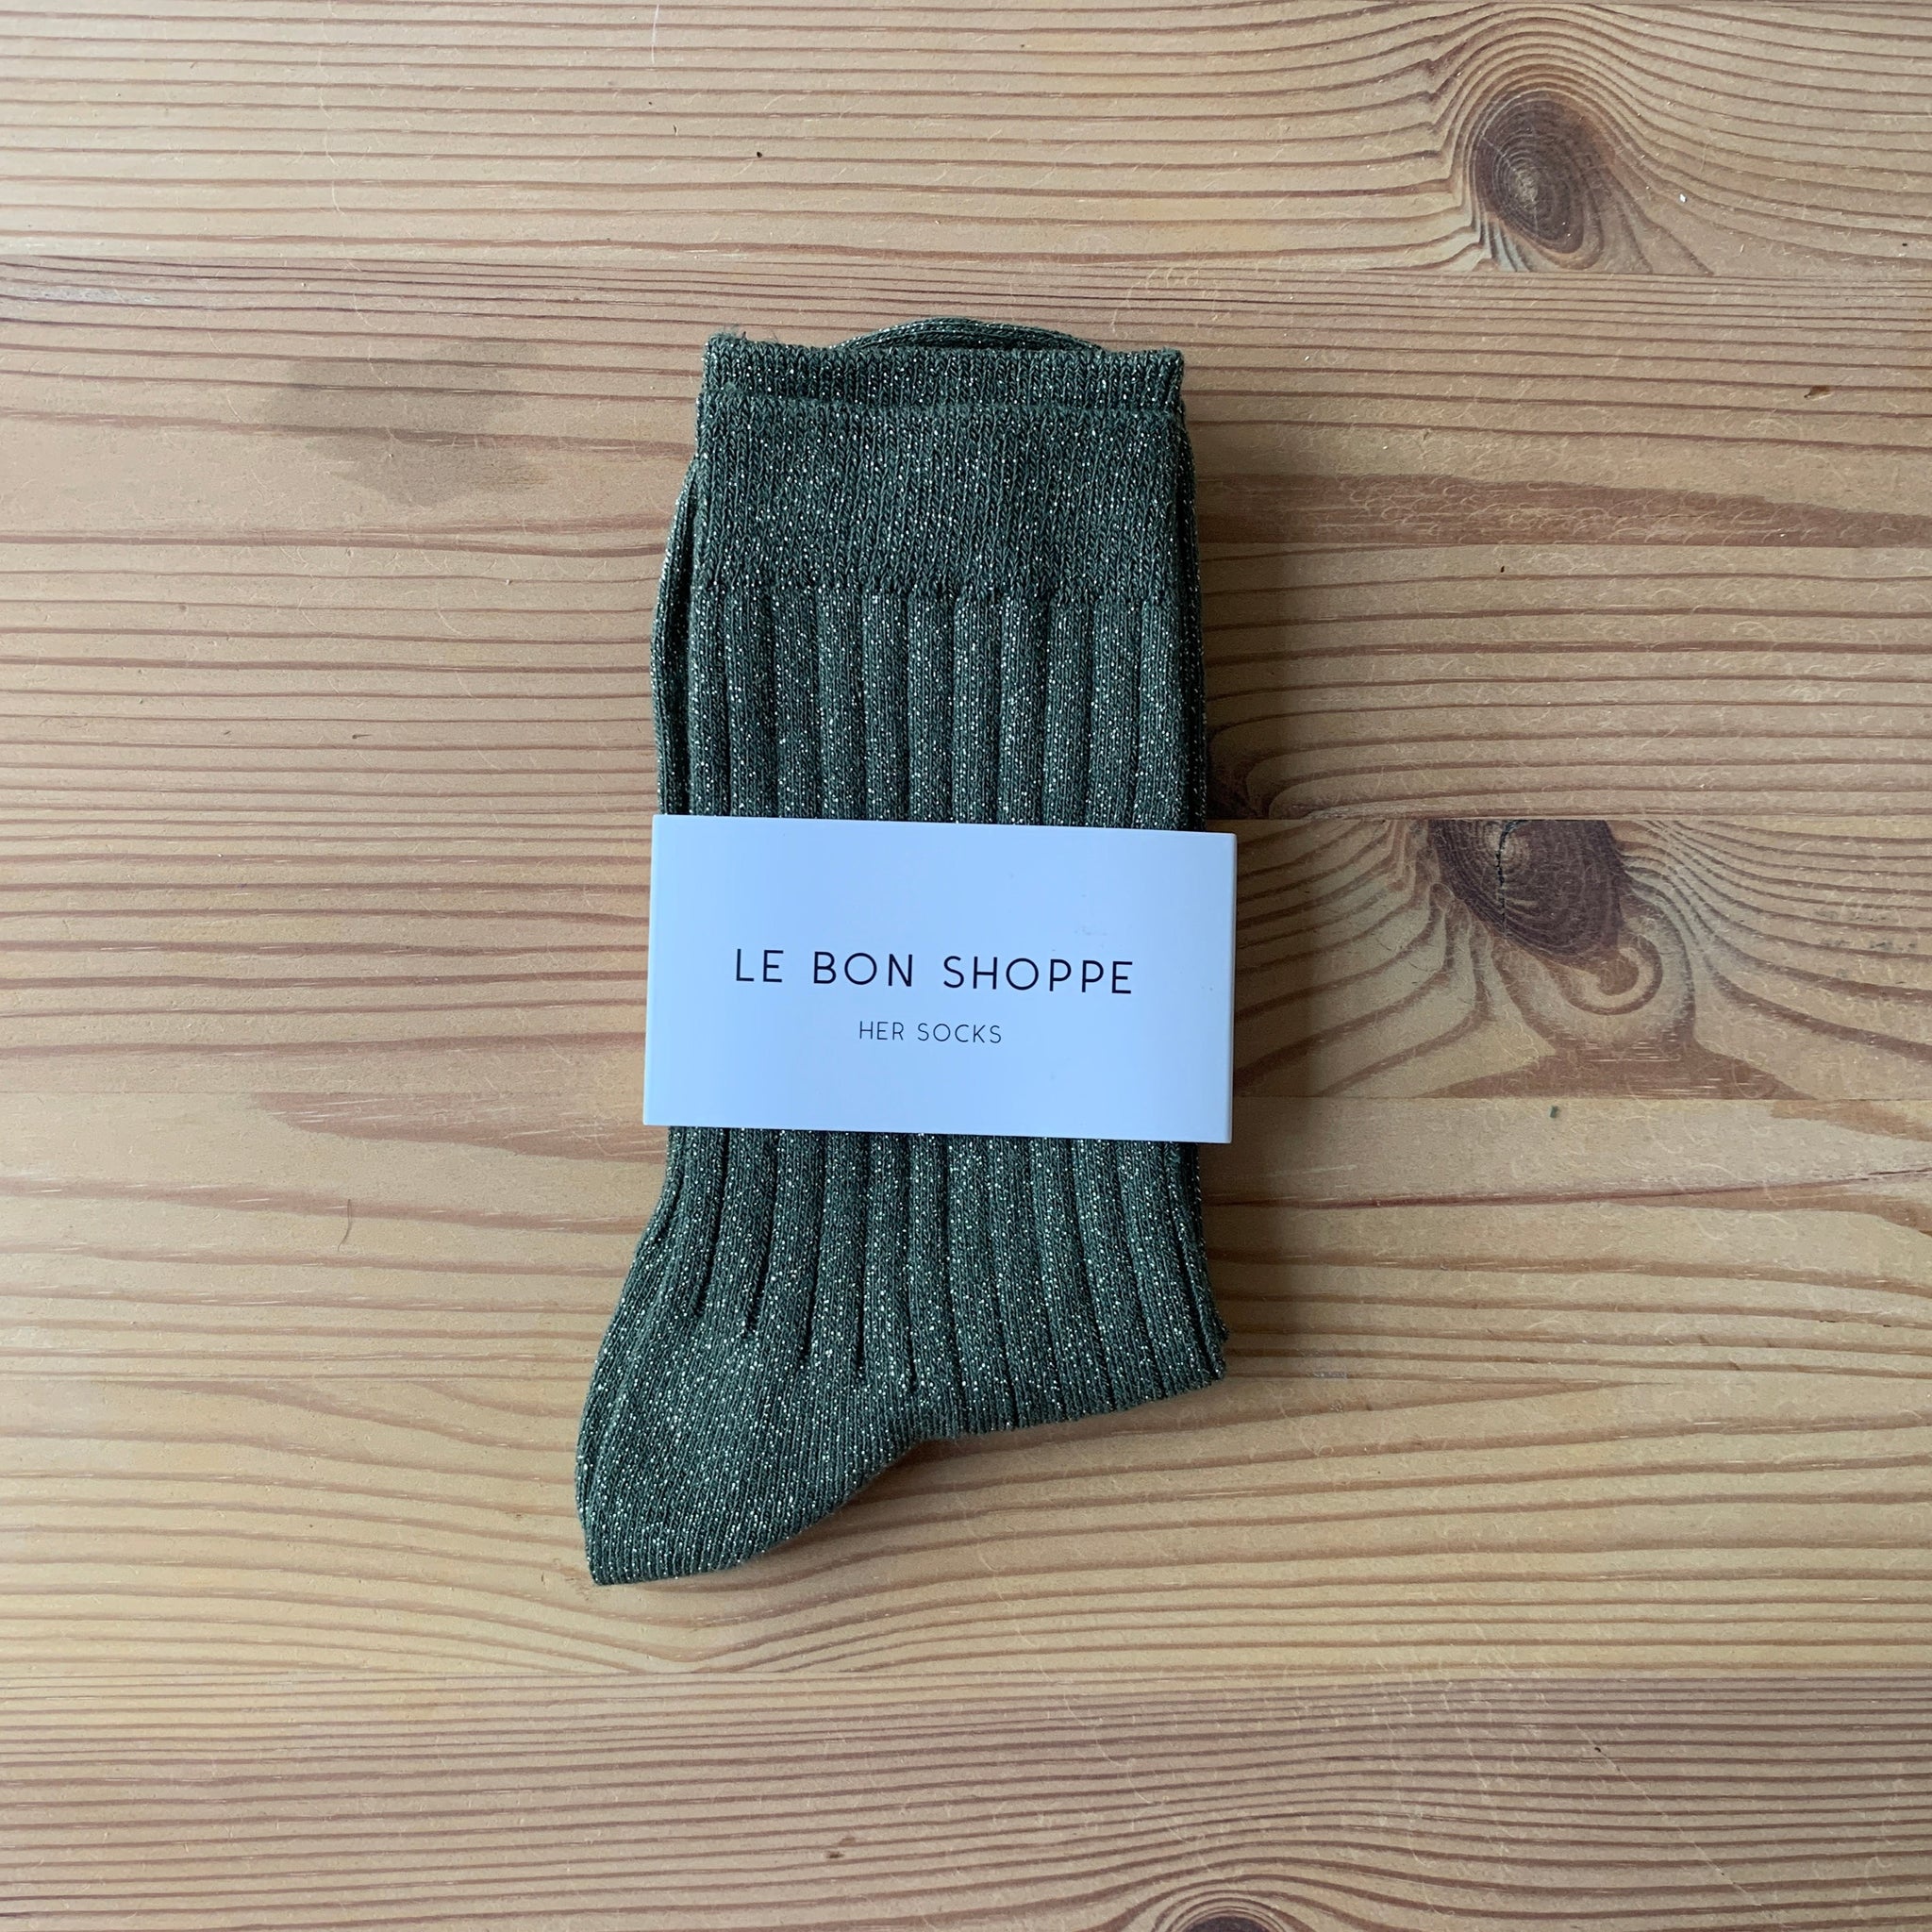 her socks by le bon shoppe